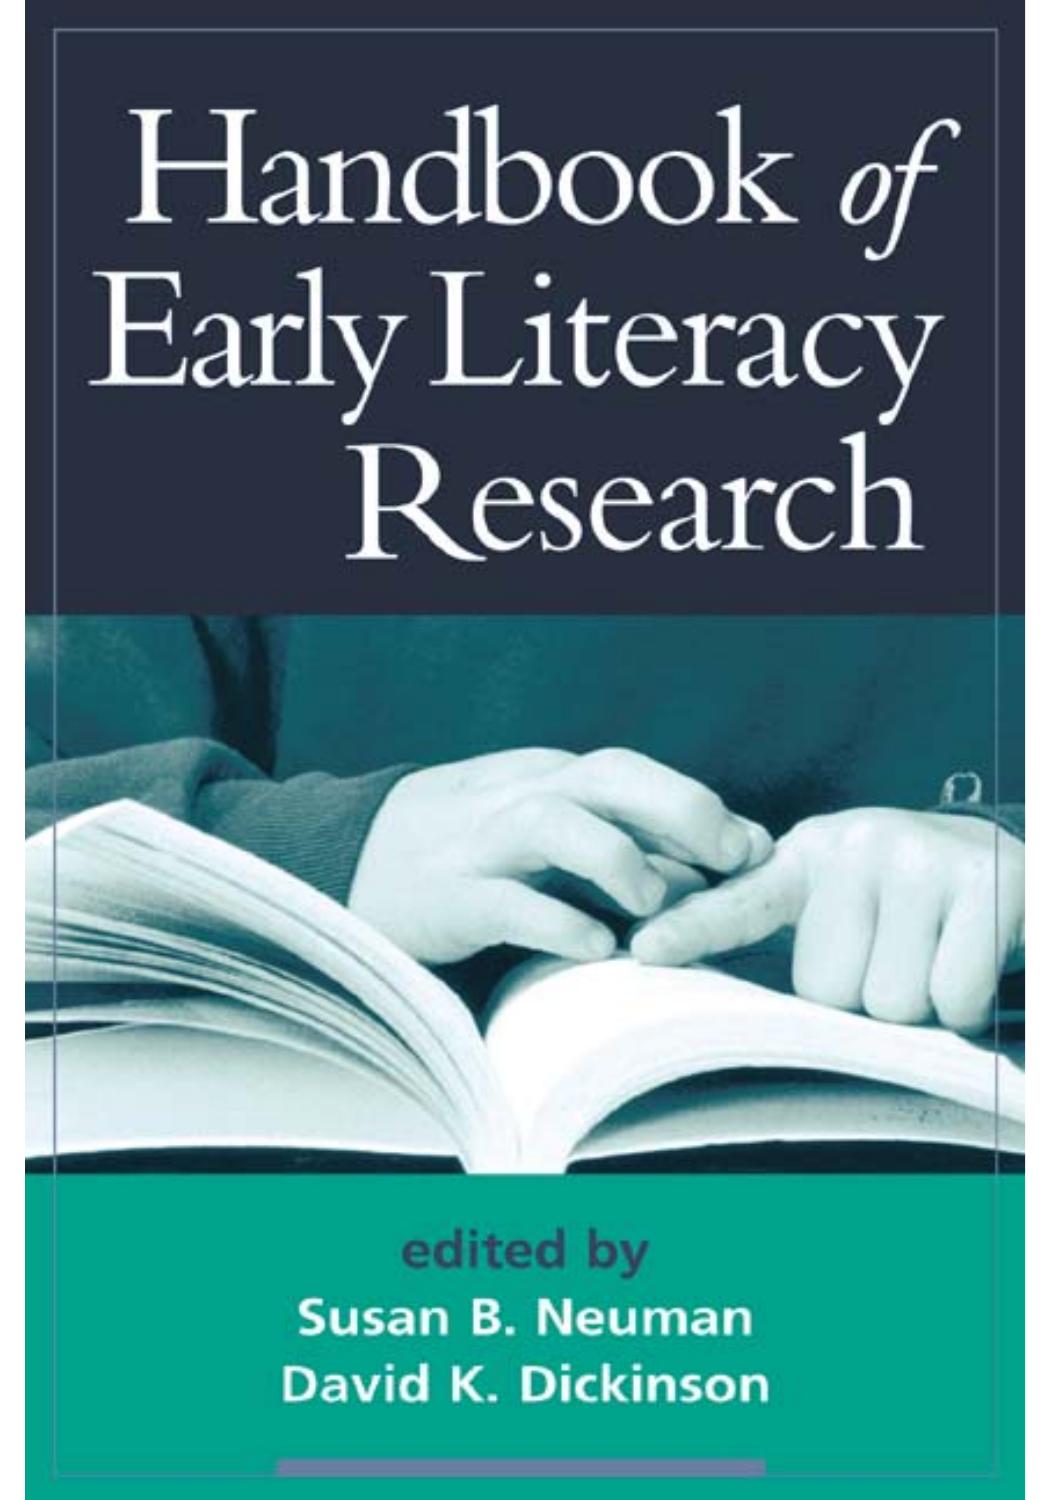 Handbook of Early Literacy Research - Edited by Susan B. Neuman  , David K. Dickinson  